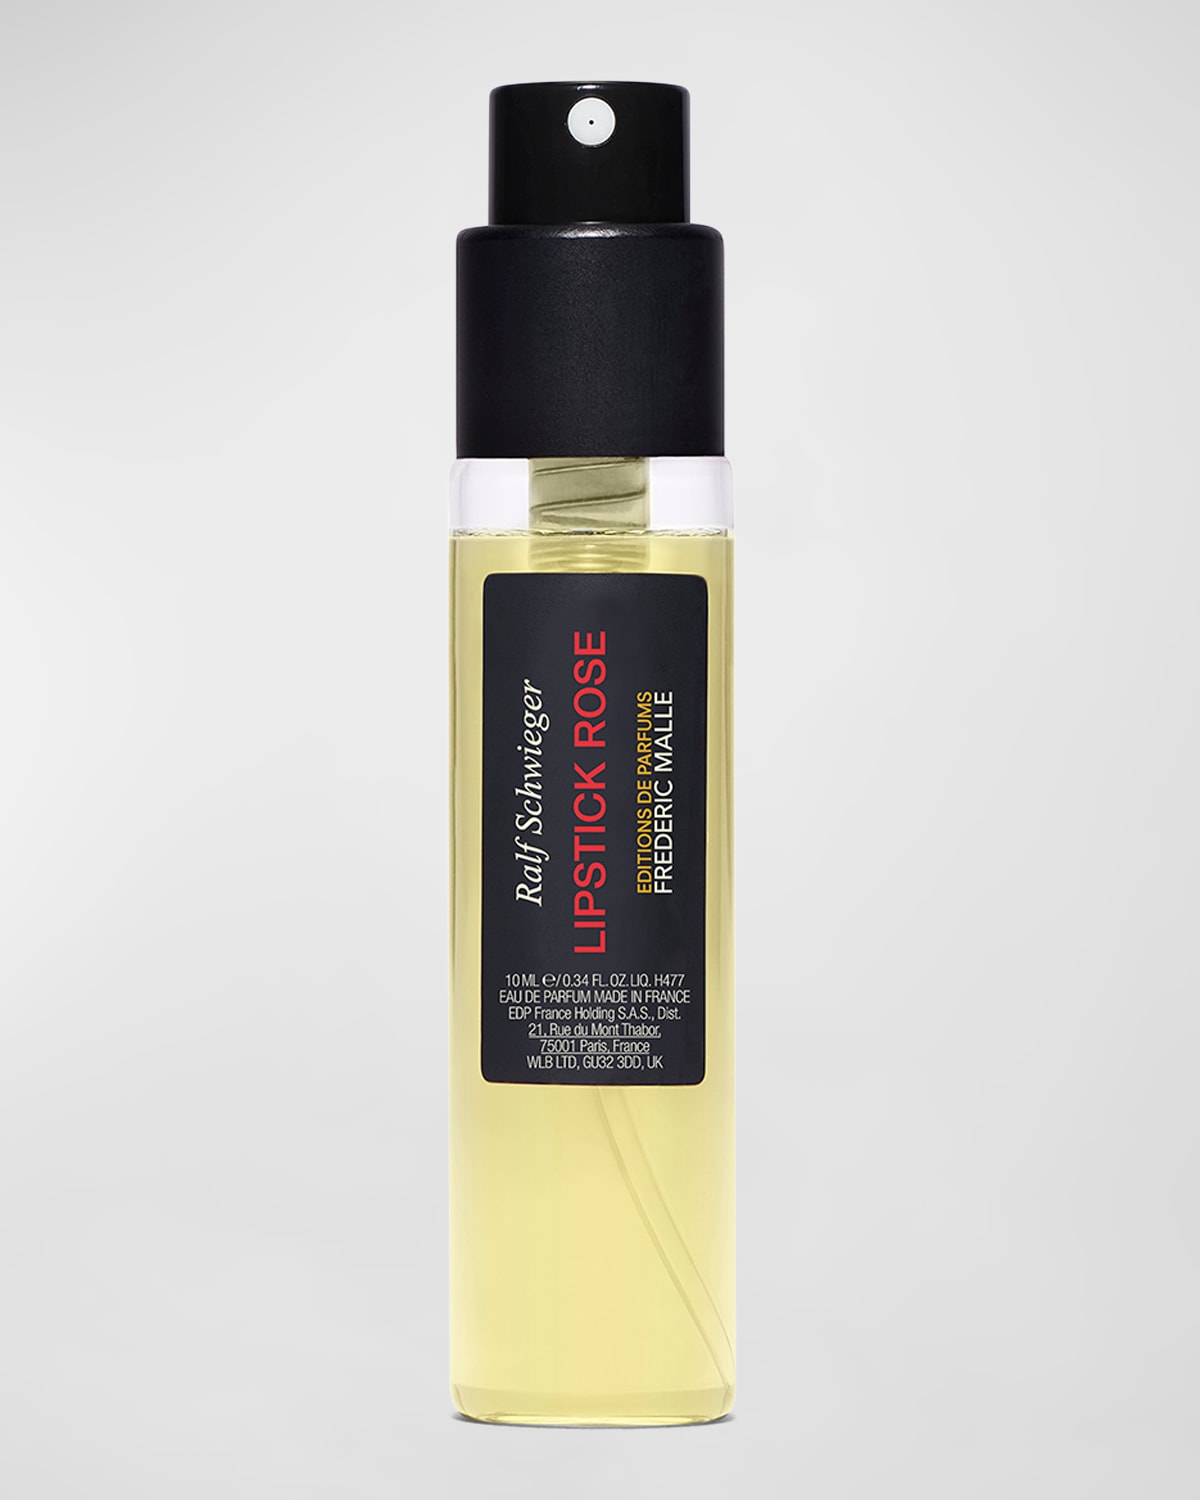 Editions de Parfums Frederic Malle Lys Mediterranee Travel Perfume Refill, 0.3 oz.